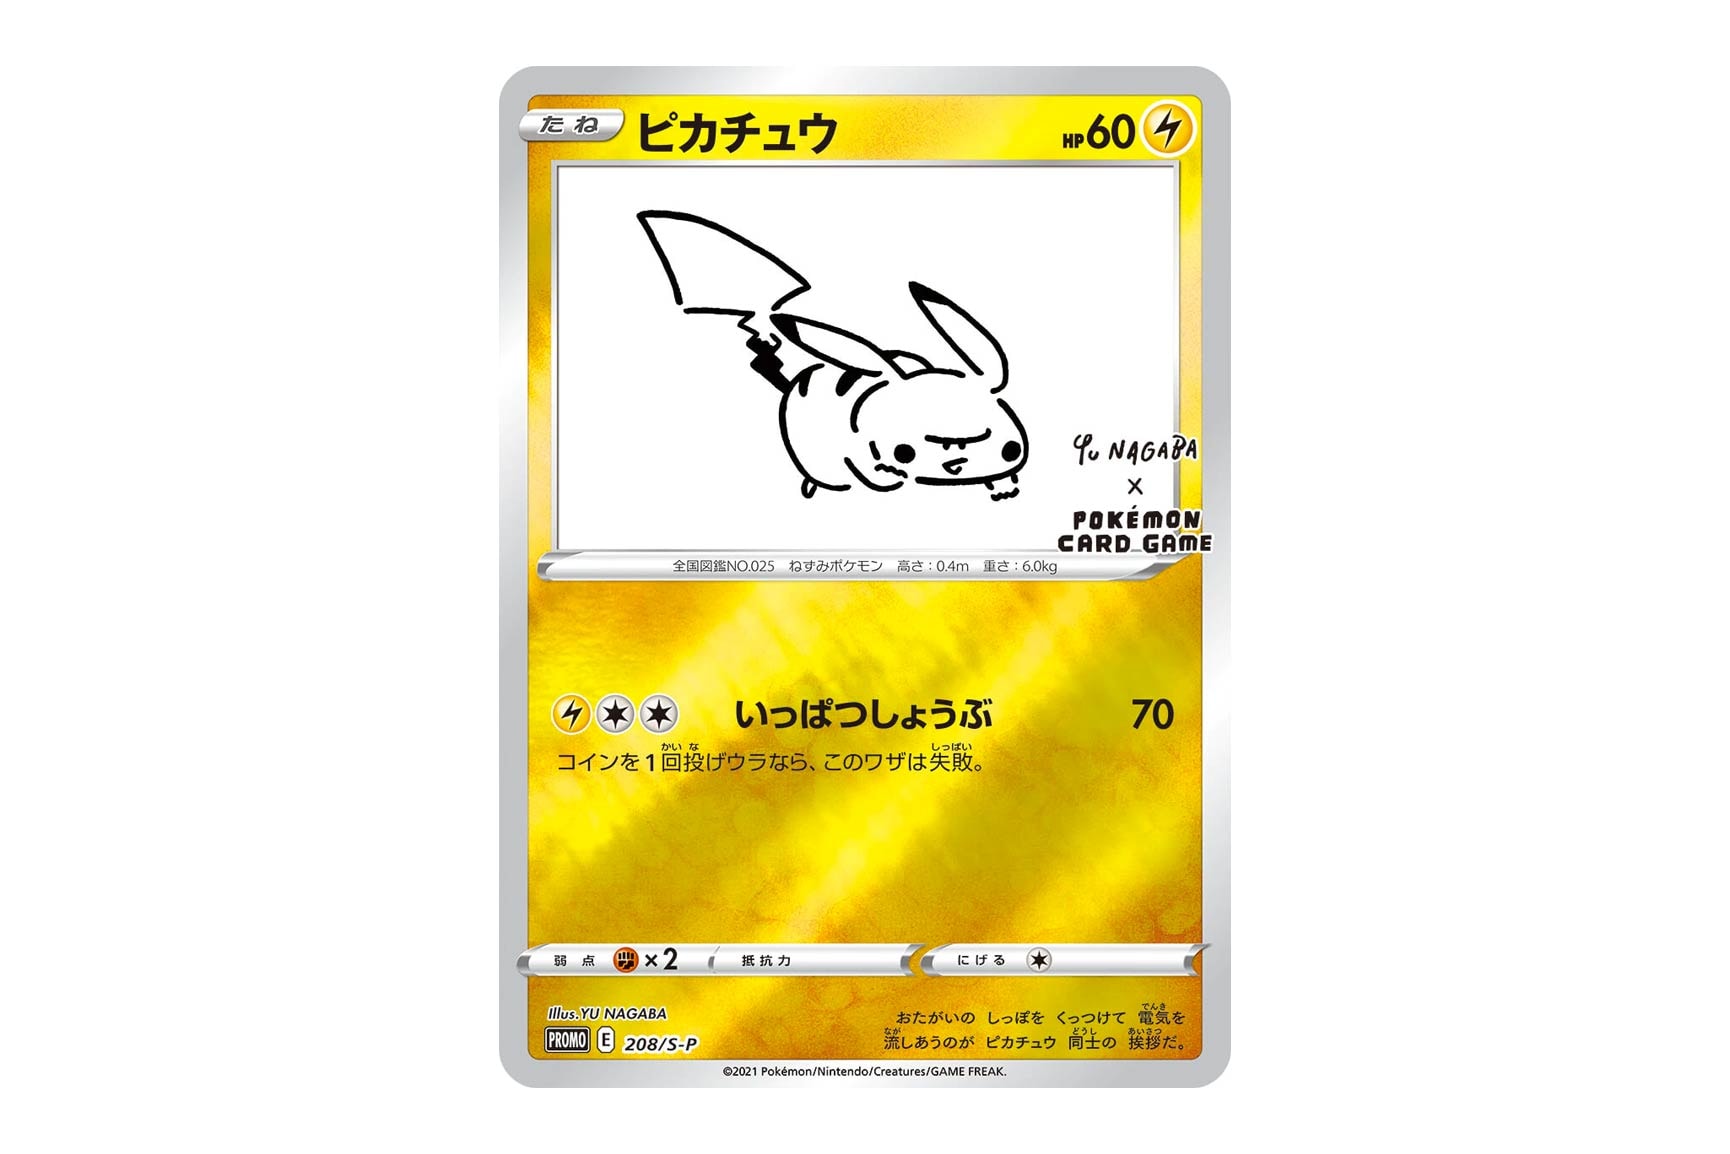 Pokémon TCG Yu Nagaba Pikachu Promo card Japan Pokemon Centers trading cards promos pikachu